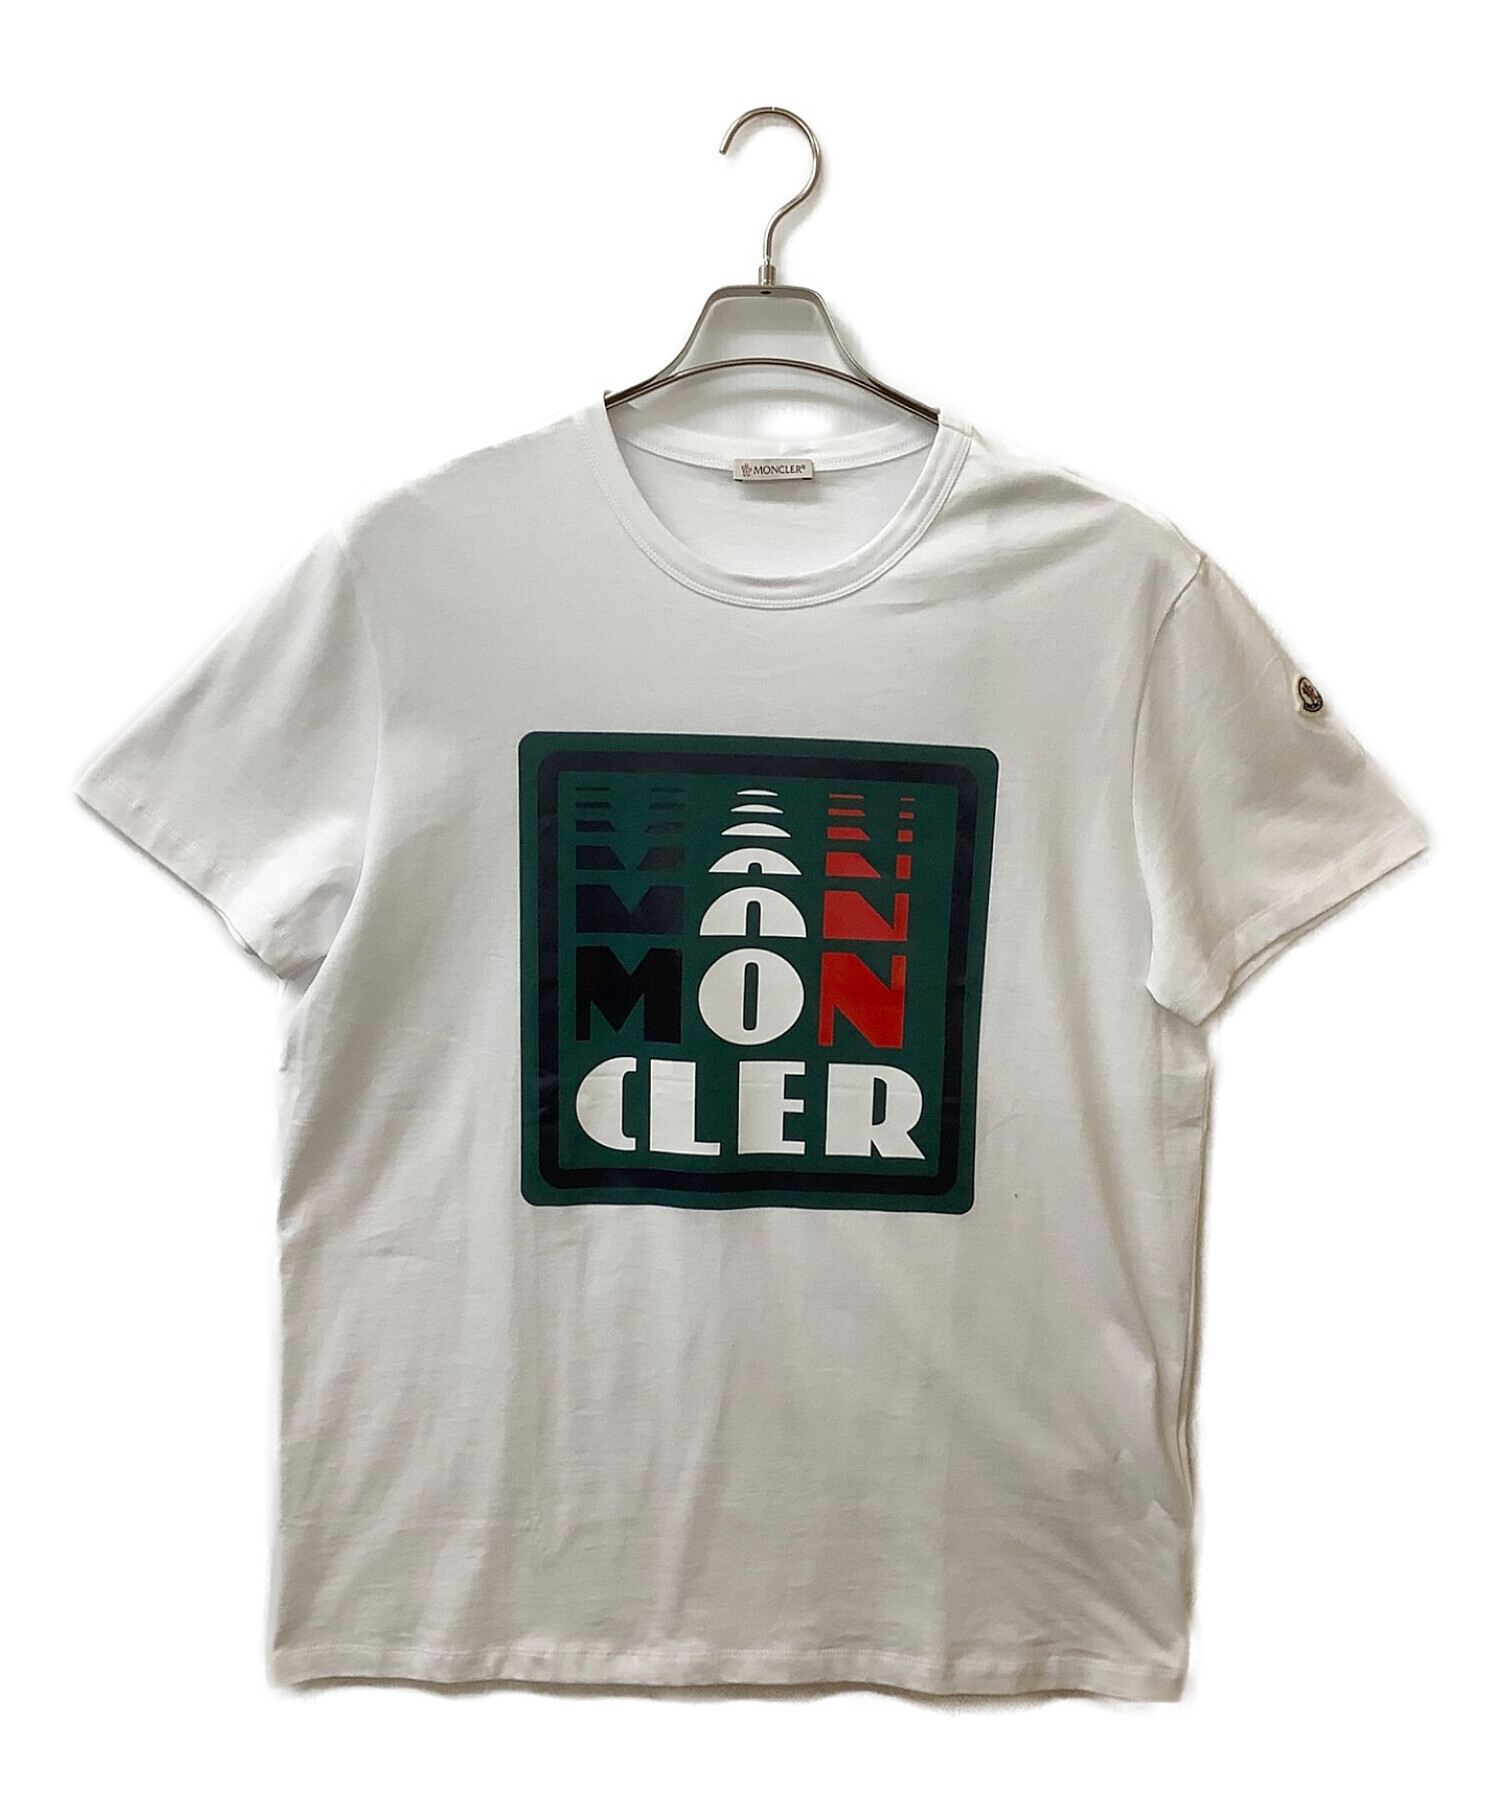 MONCLER (モンクレール) ロゴプリントTシャツ ホワイト×グリーン サイズ:XL